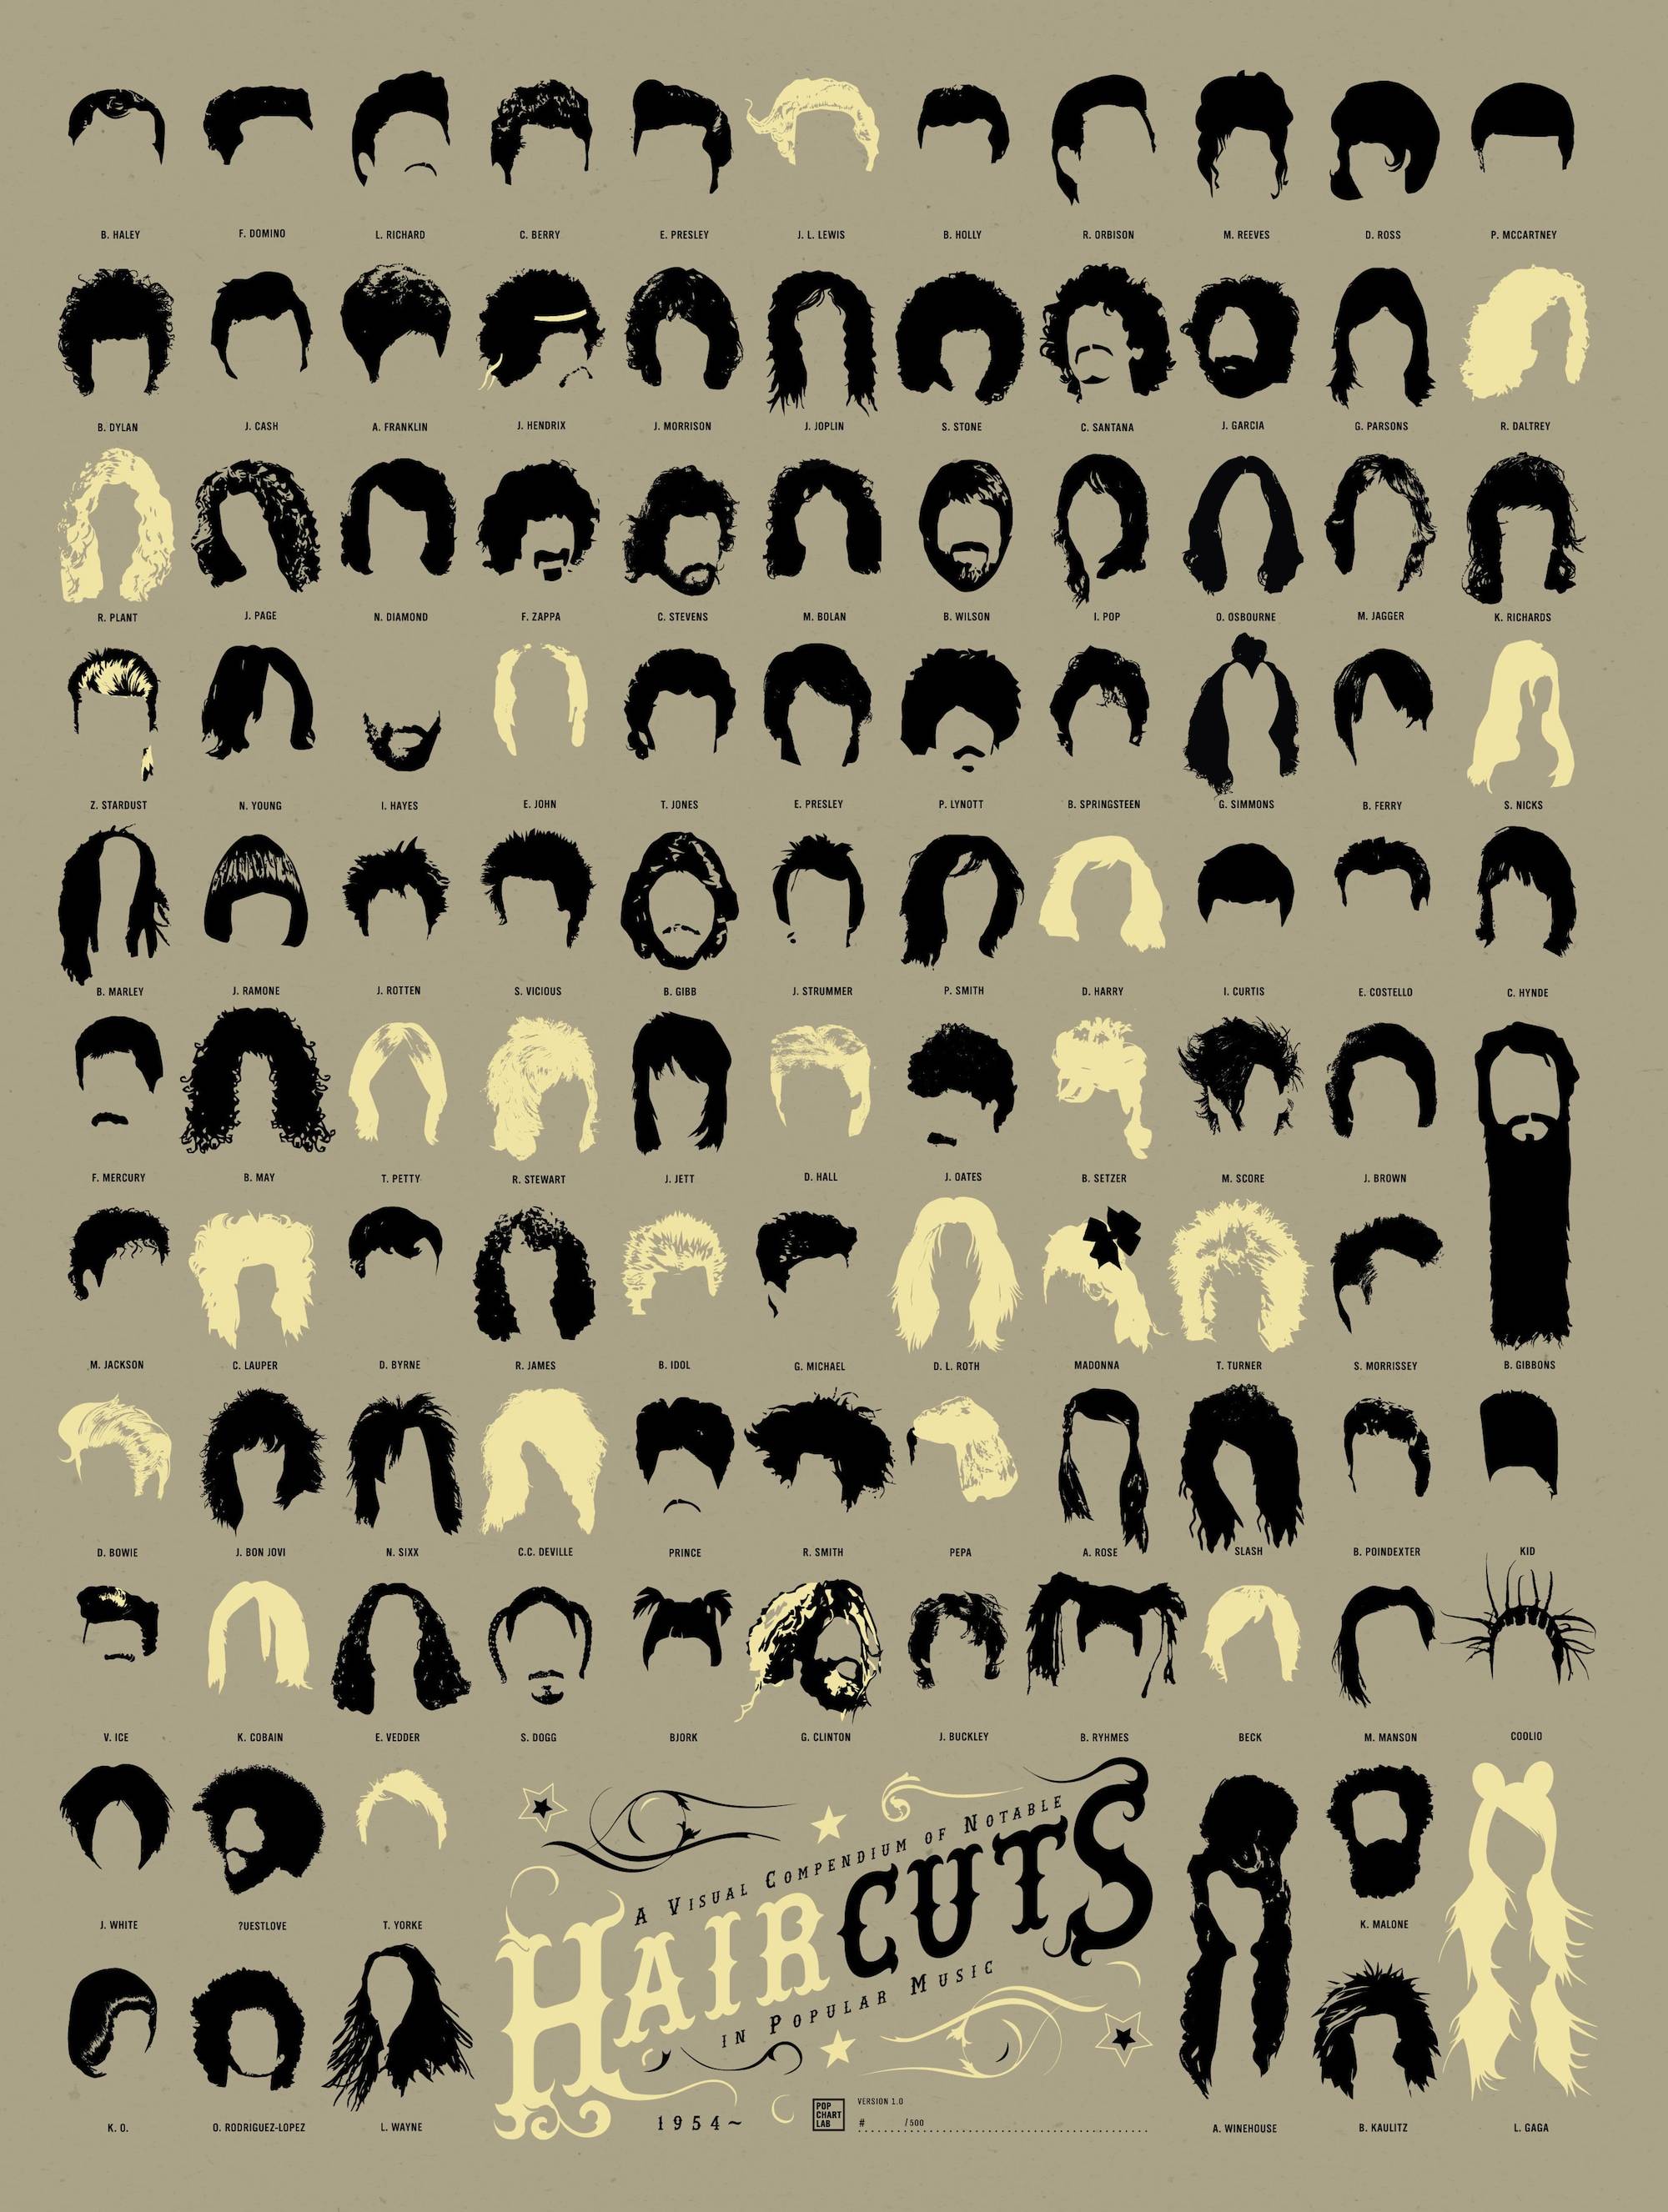 random pic visual compendium of notable haircuts in popular music